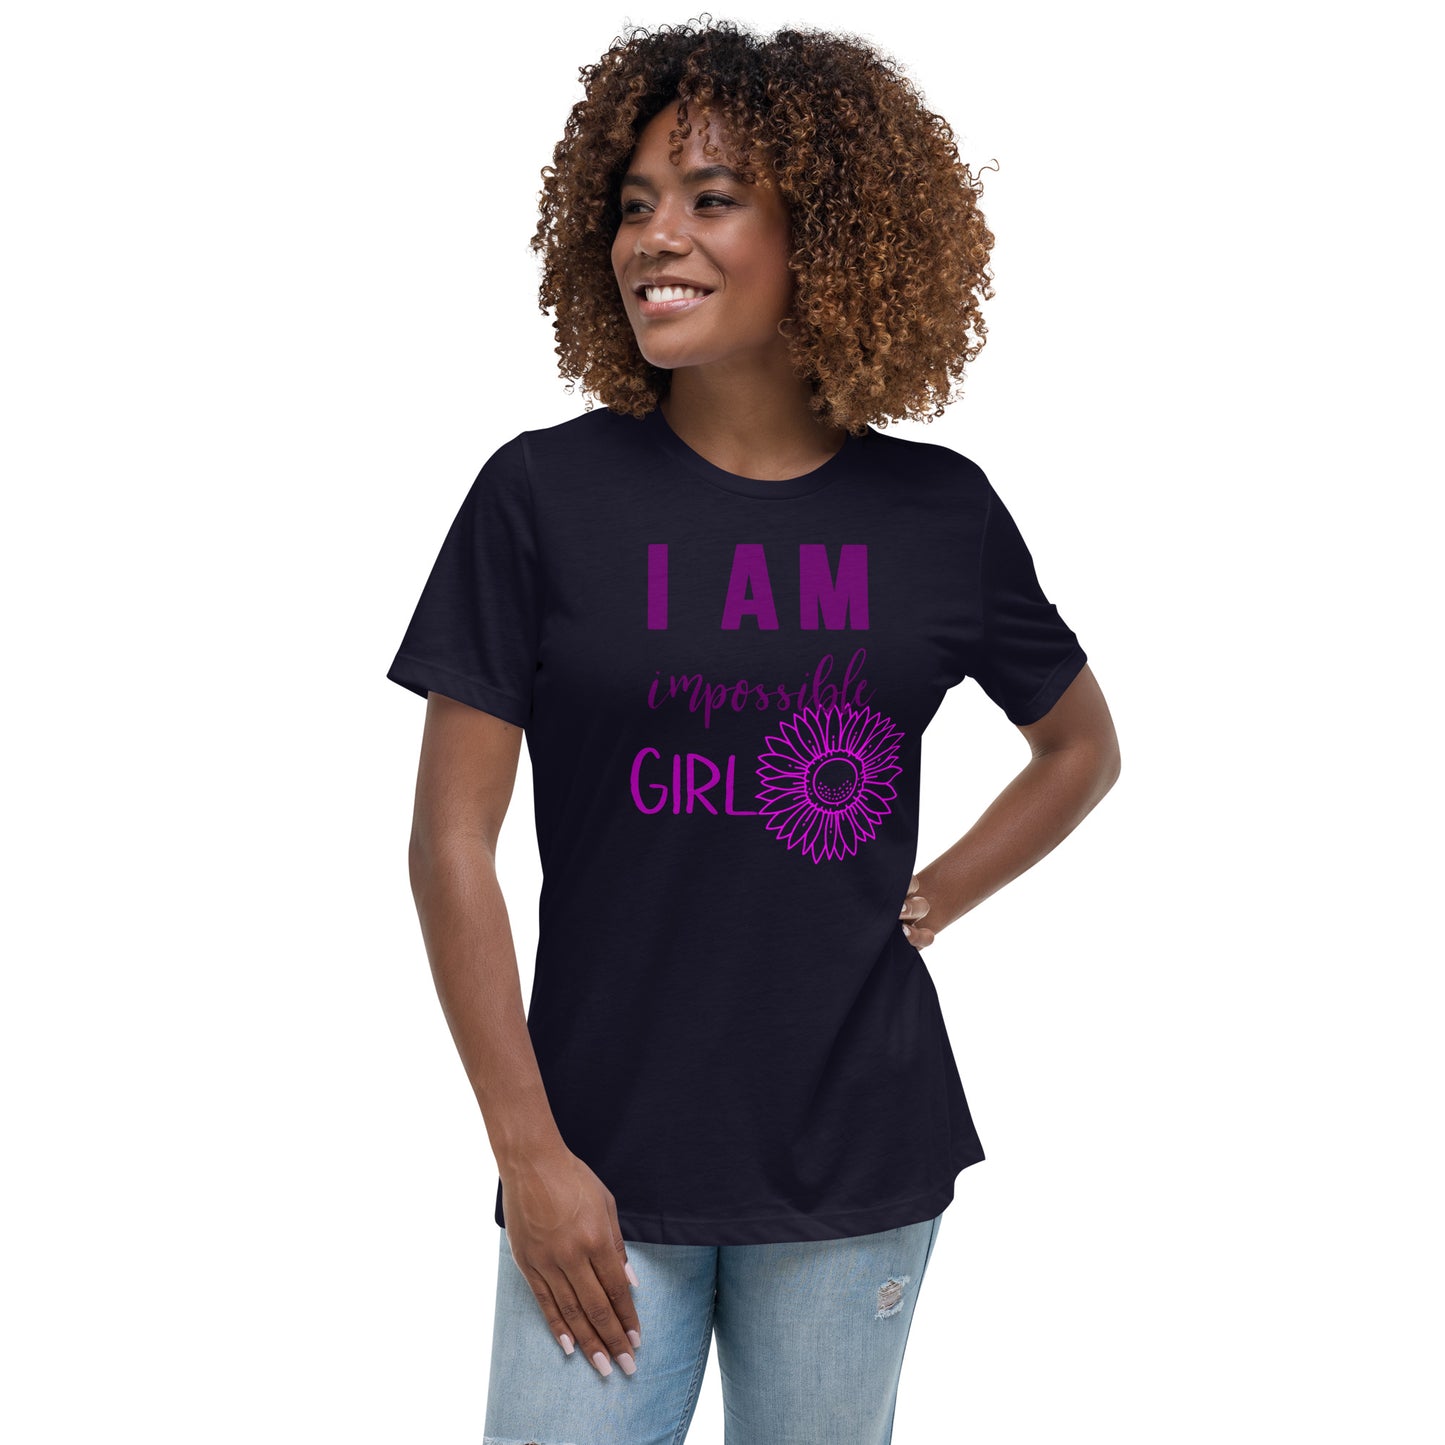 I am Impossible girl shirt